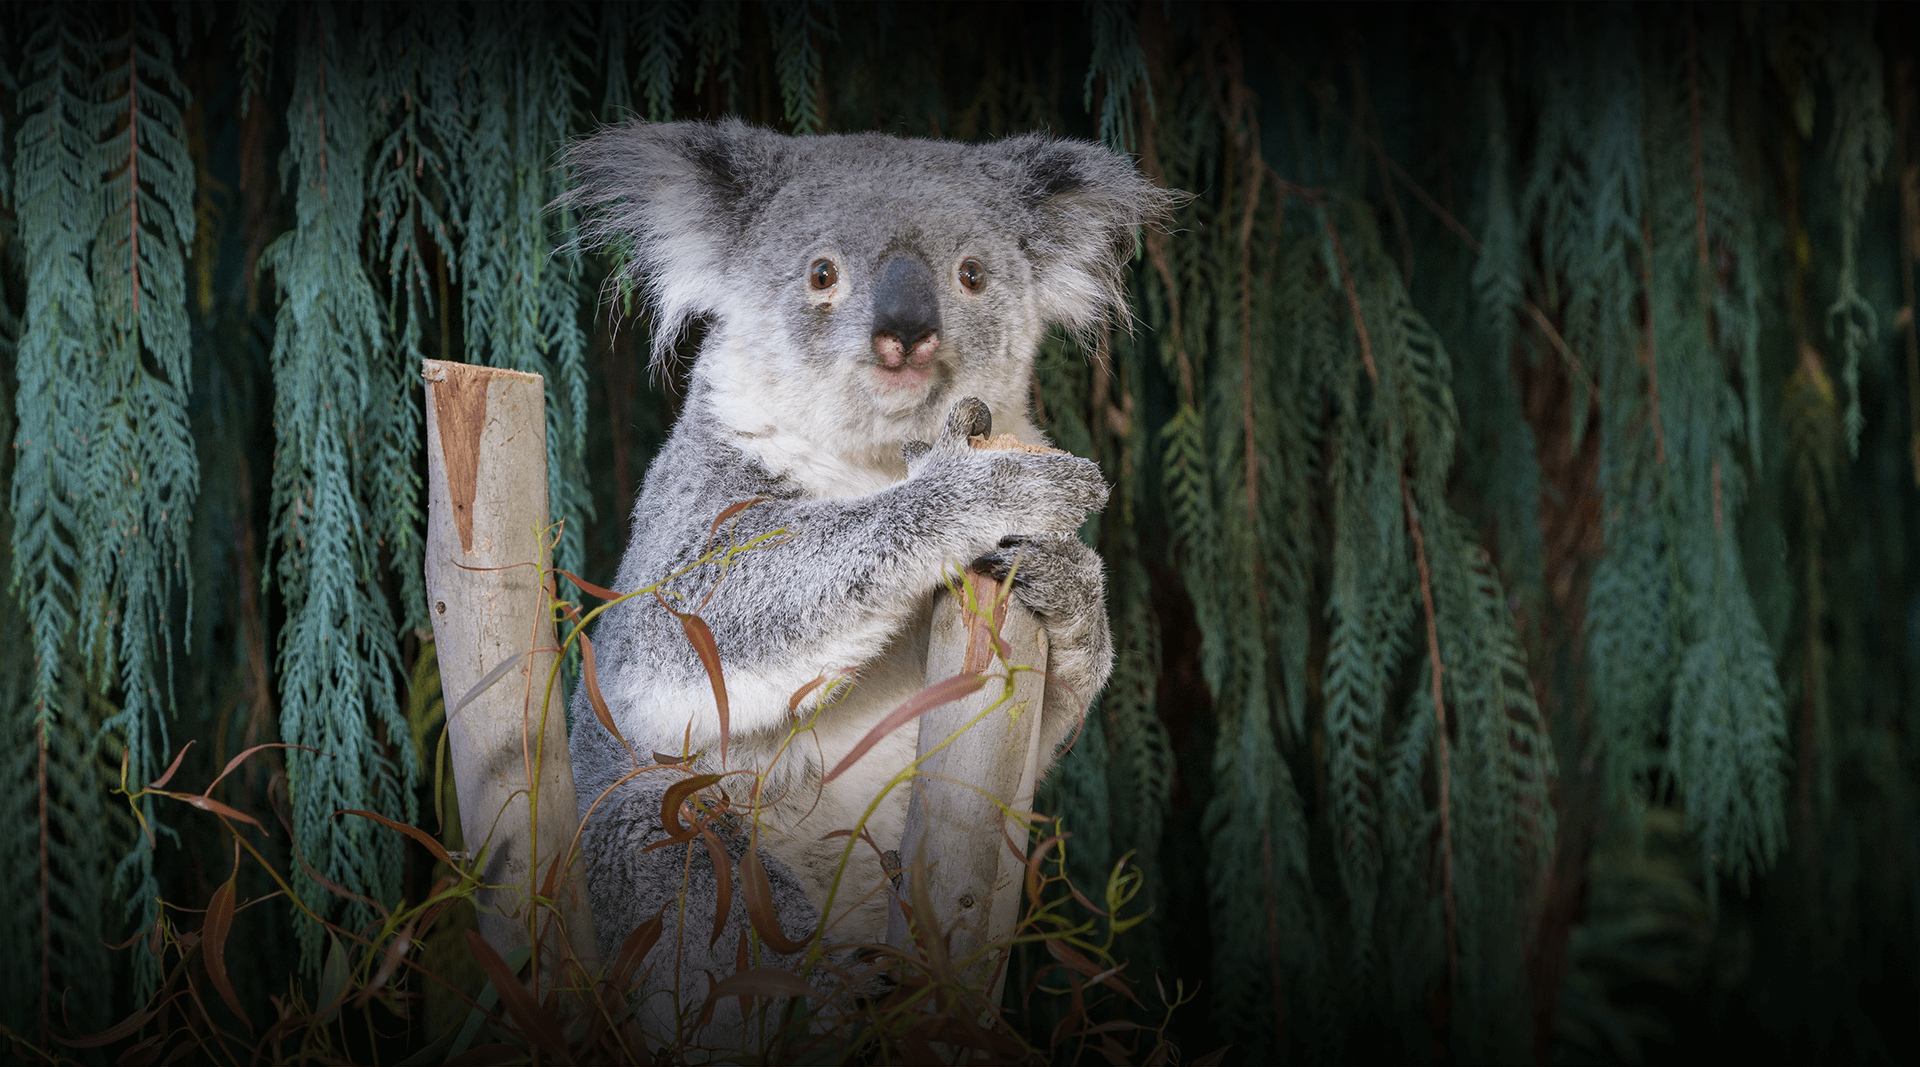 Koala sits on a branch looking at camera. 